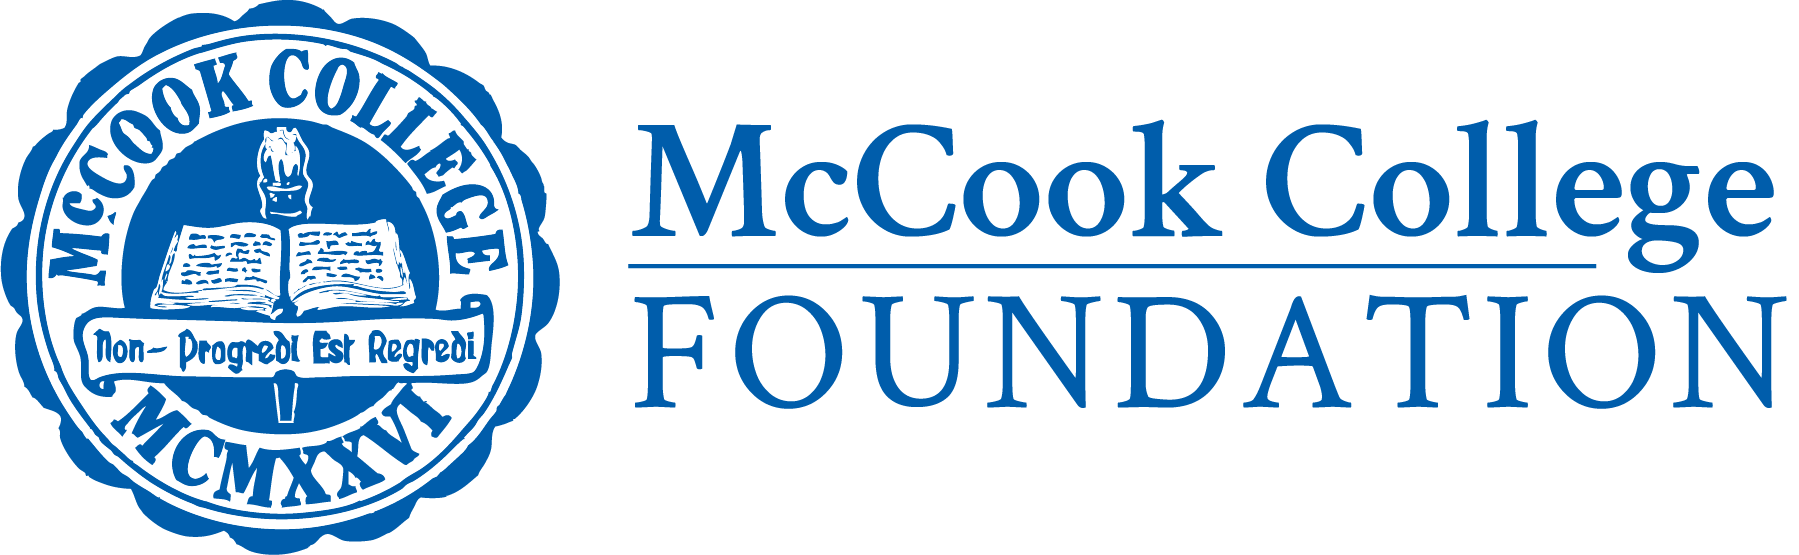 McCook College Foundation Logo